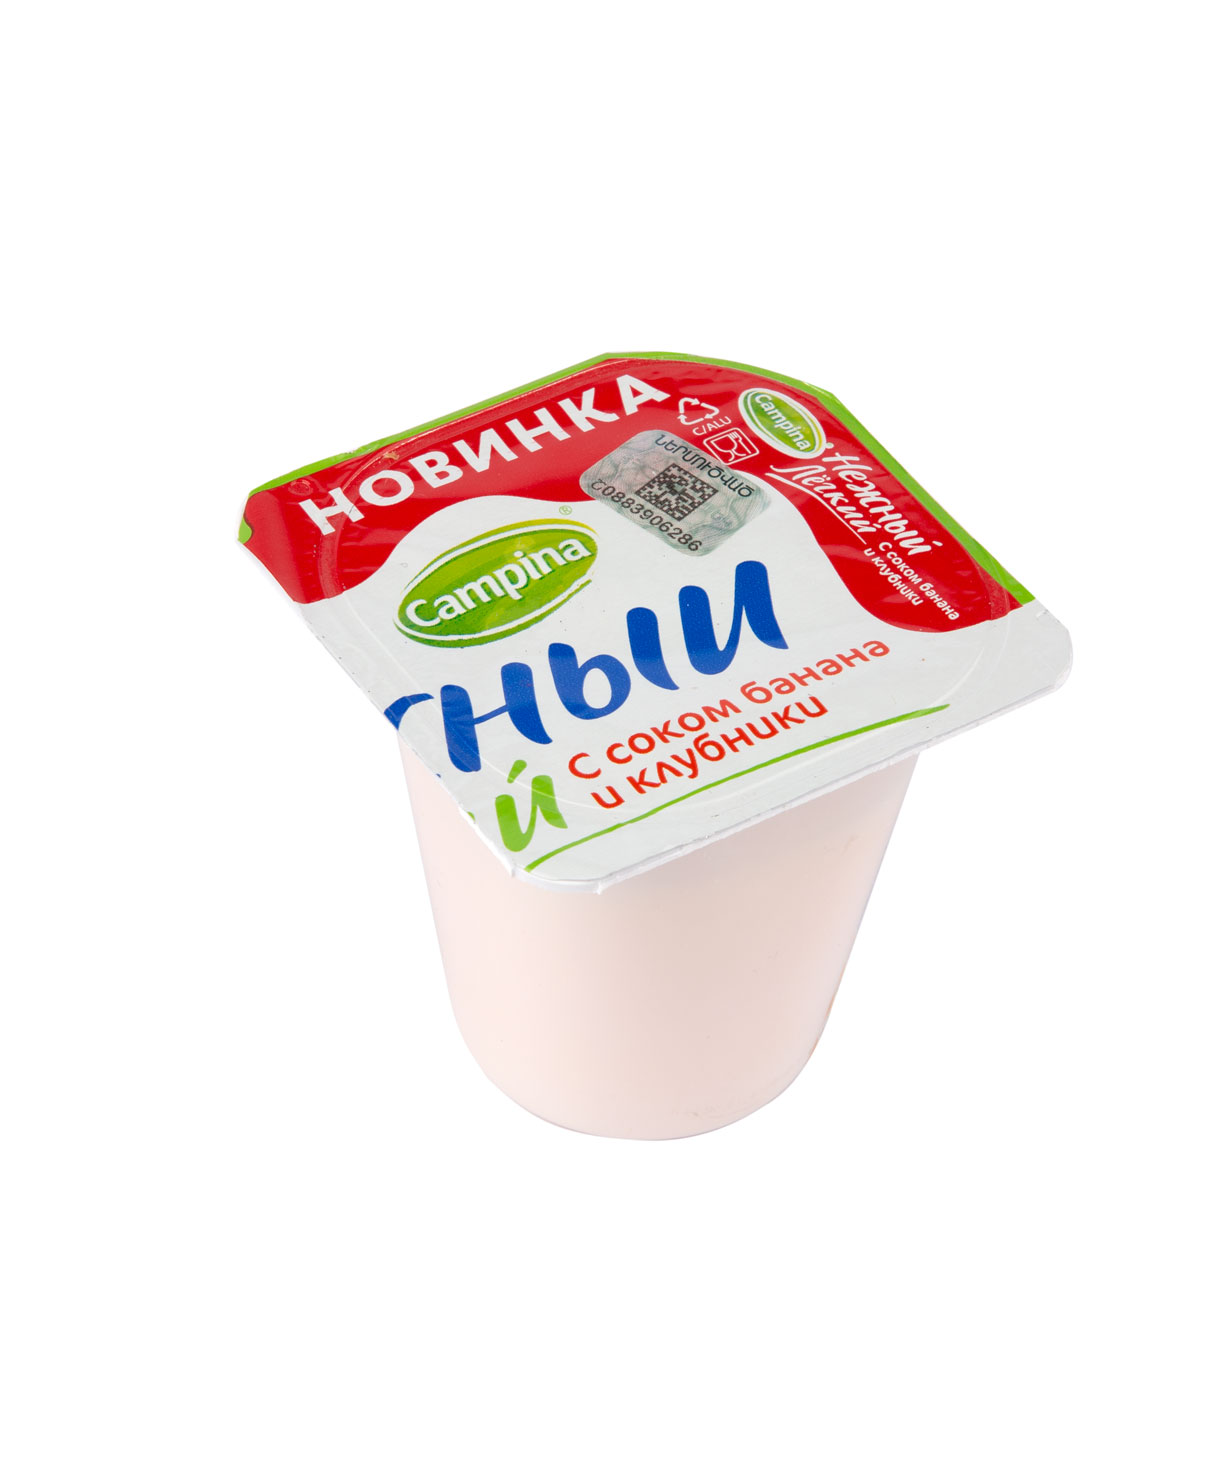 Yogurt product 